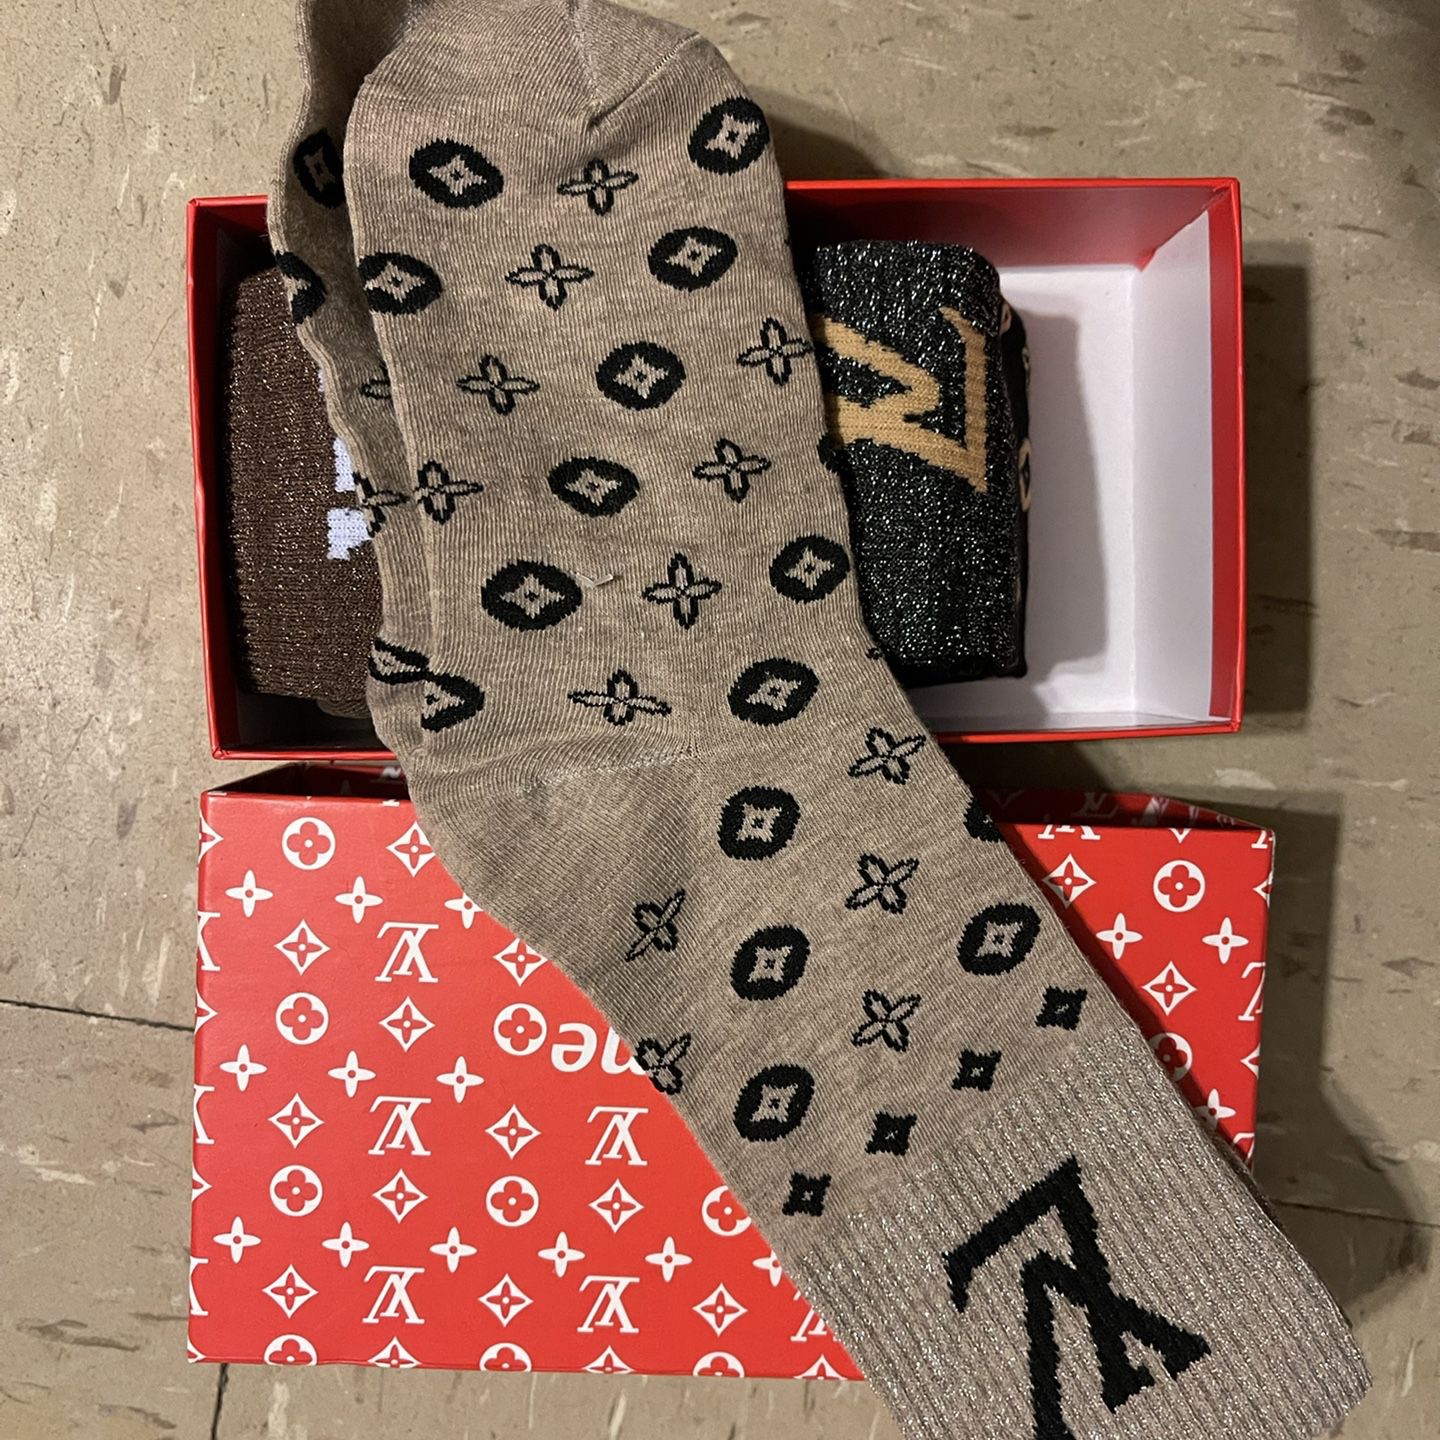 LV Louis Vuitton Socks for Sale in Las Vegas, NV - OfferUp